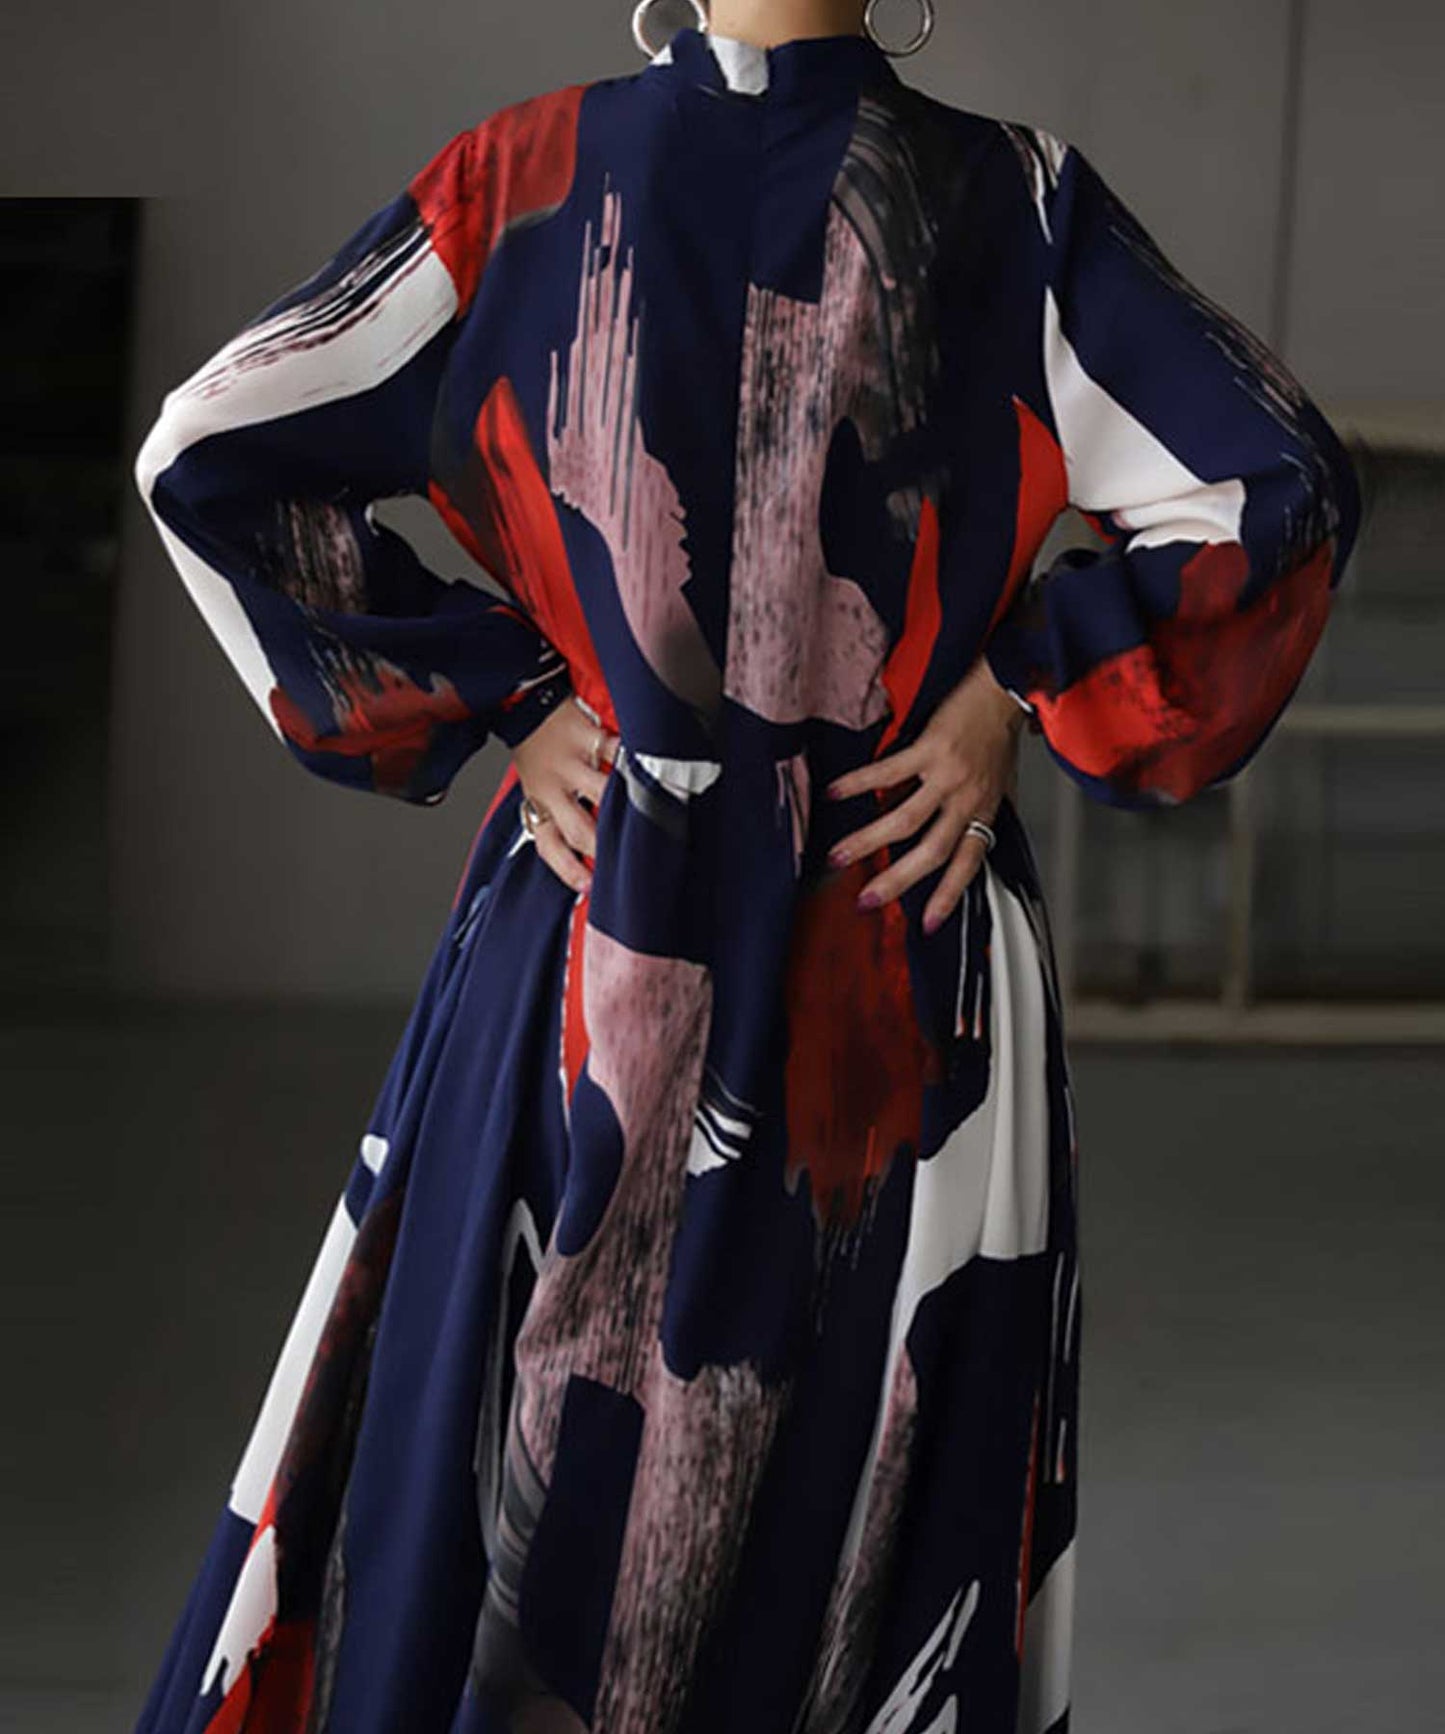 Whole pattern Casual dress Long-Sleeve Maxi Length